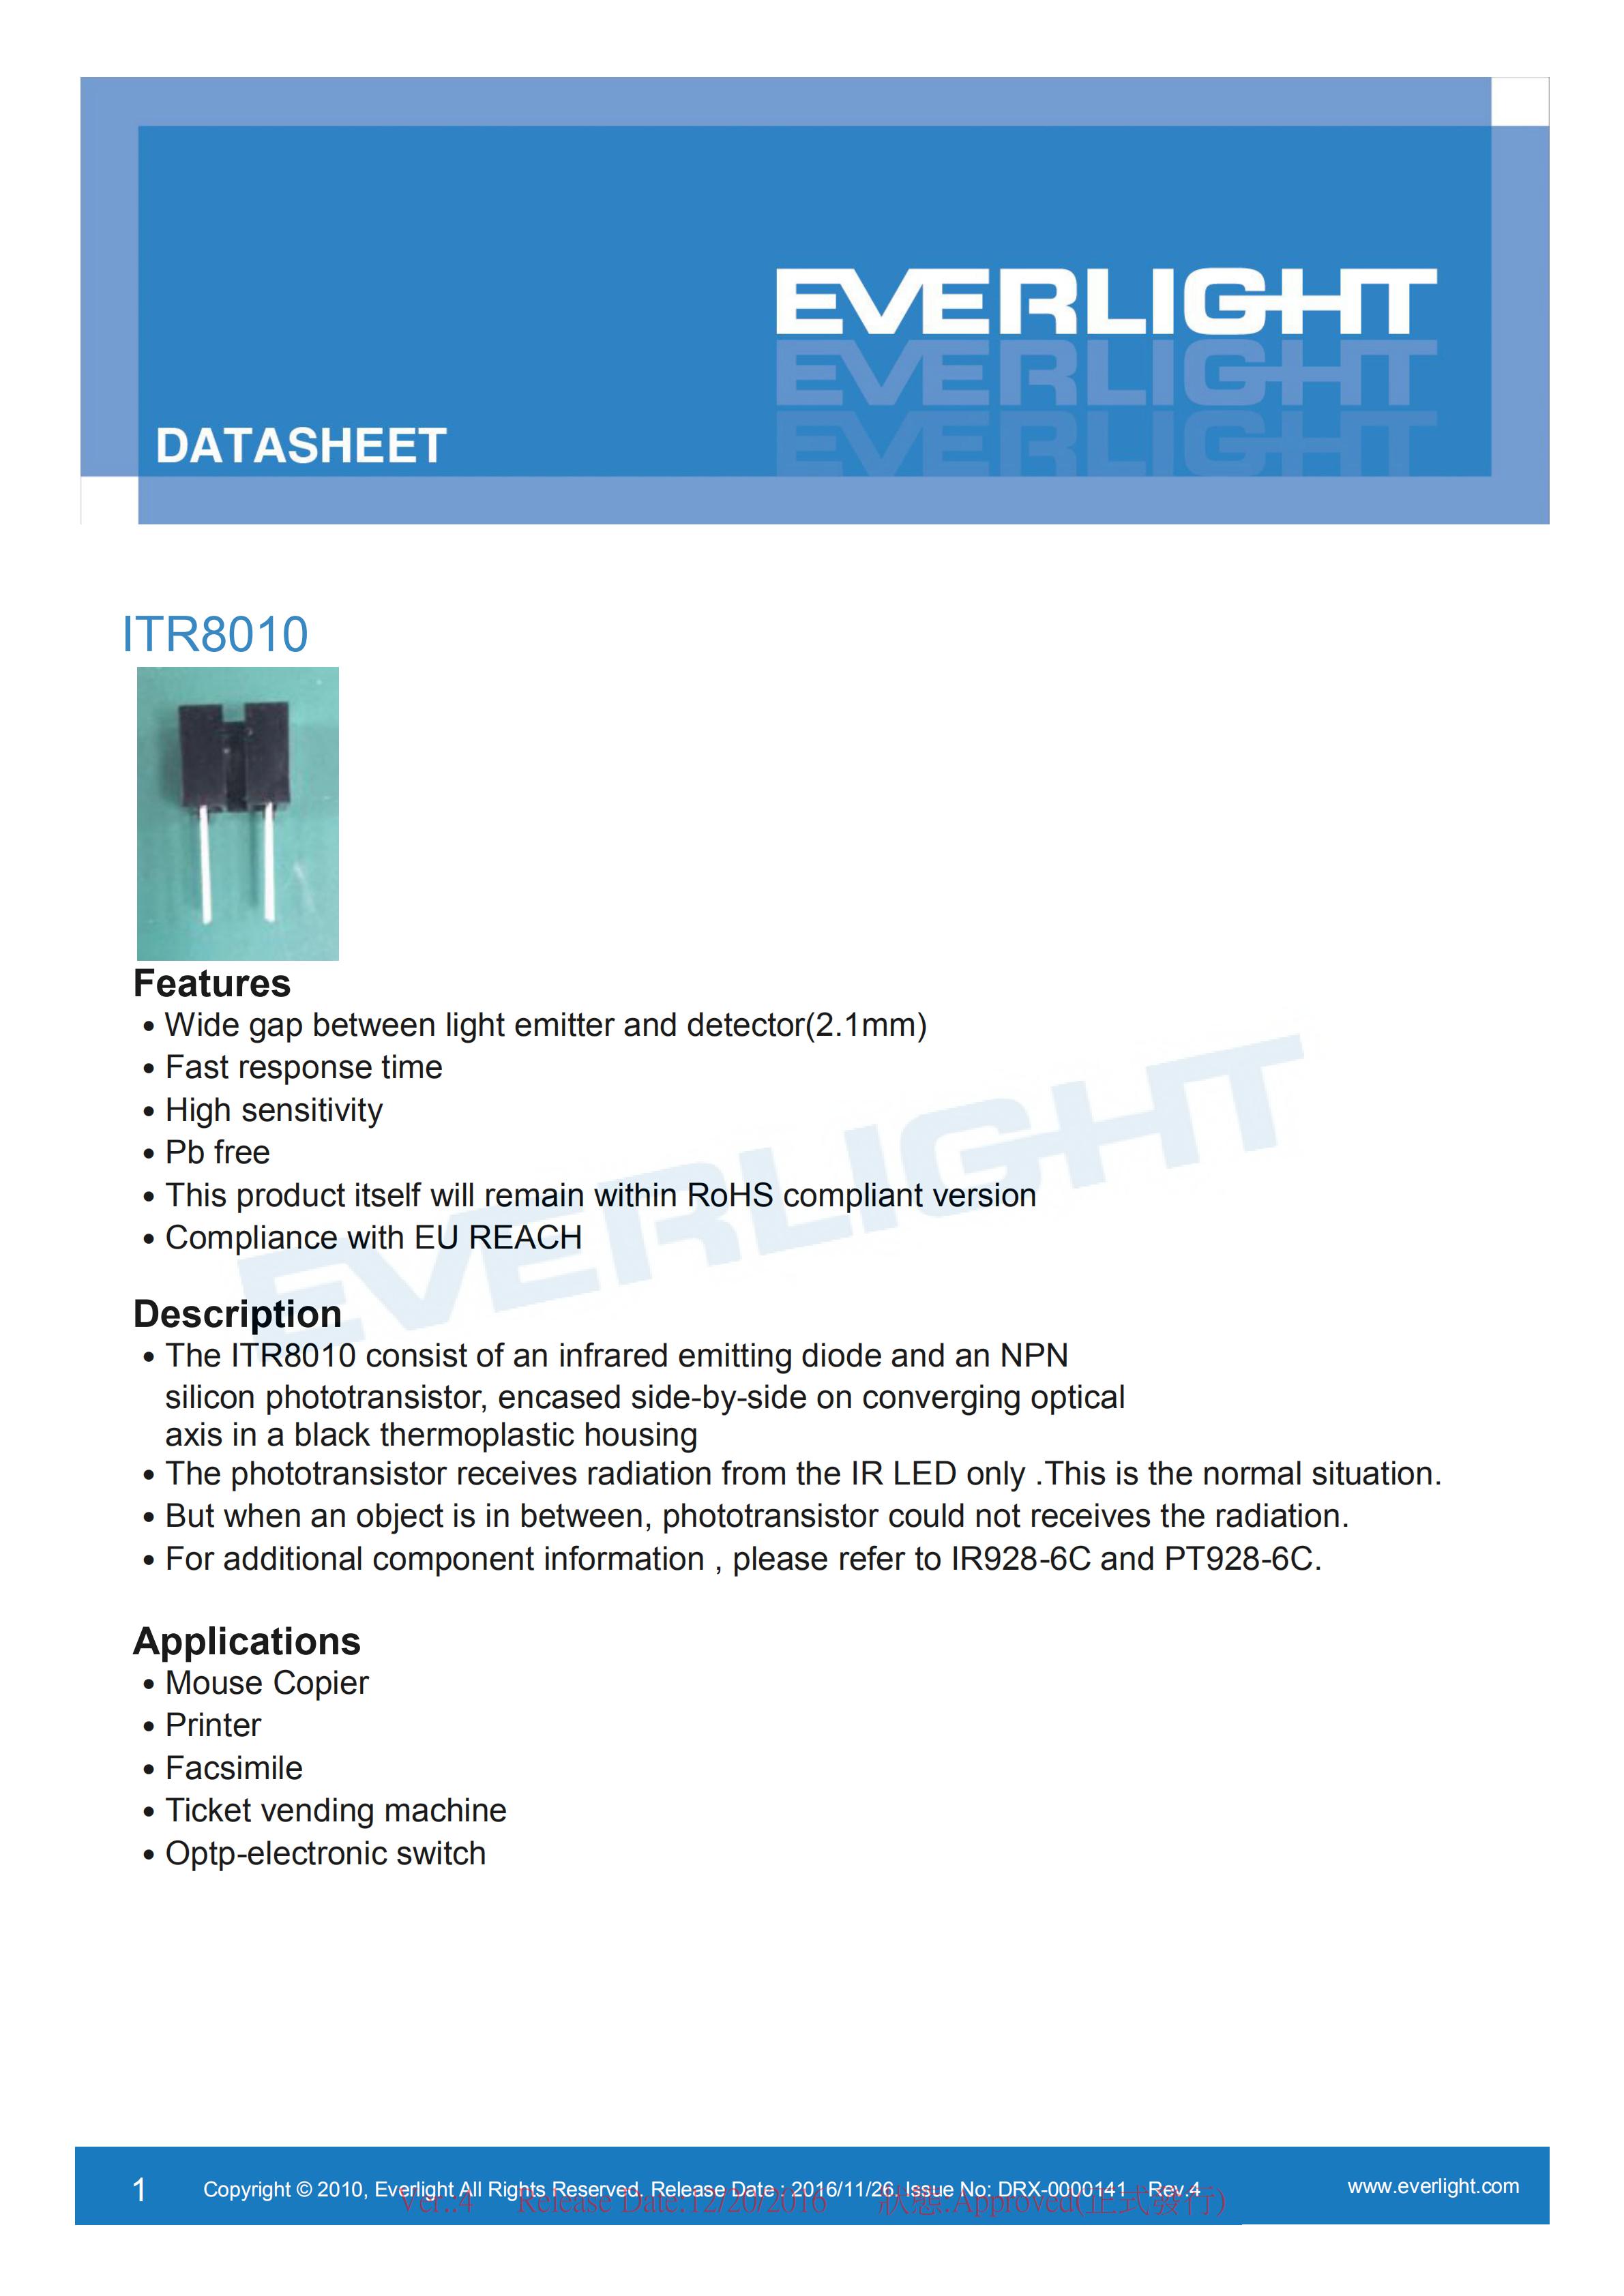 EVERLIGHT Optical Switch ITR8010 Datasheet